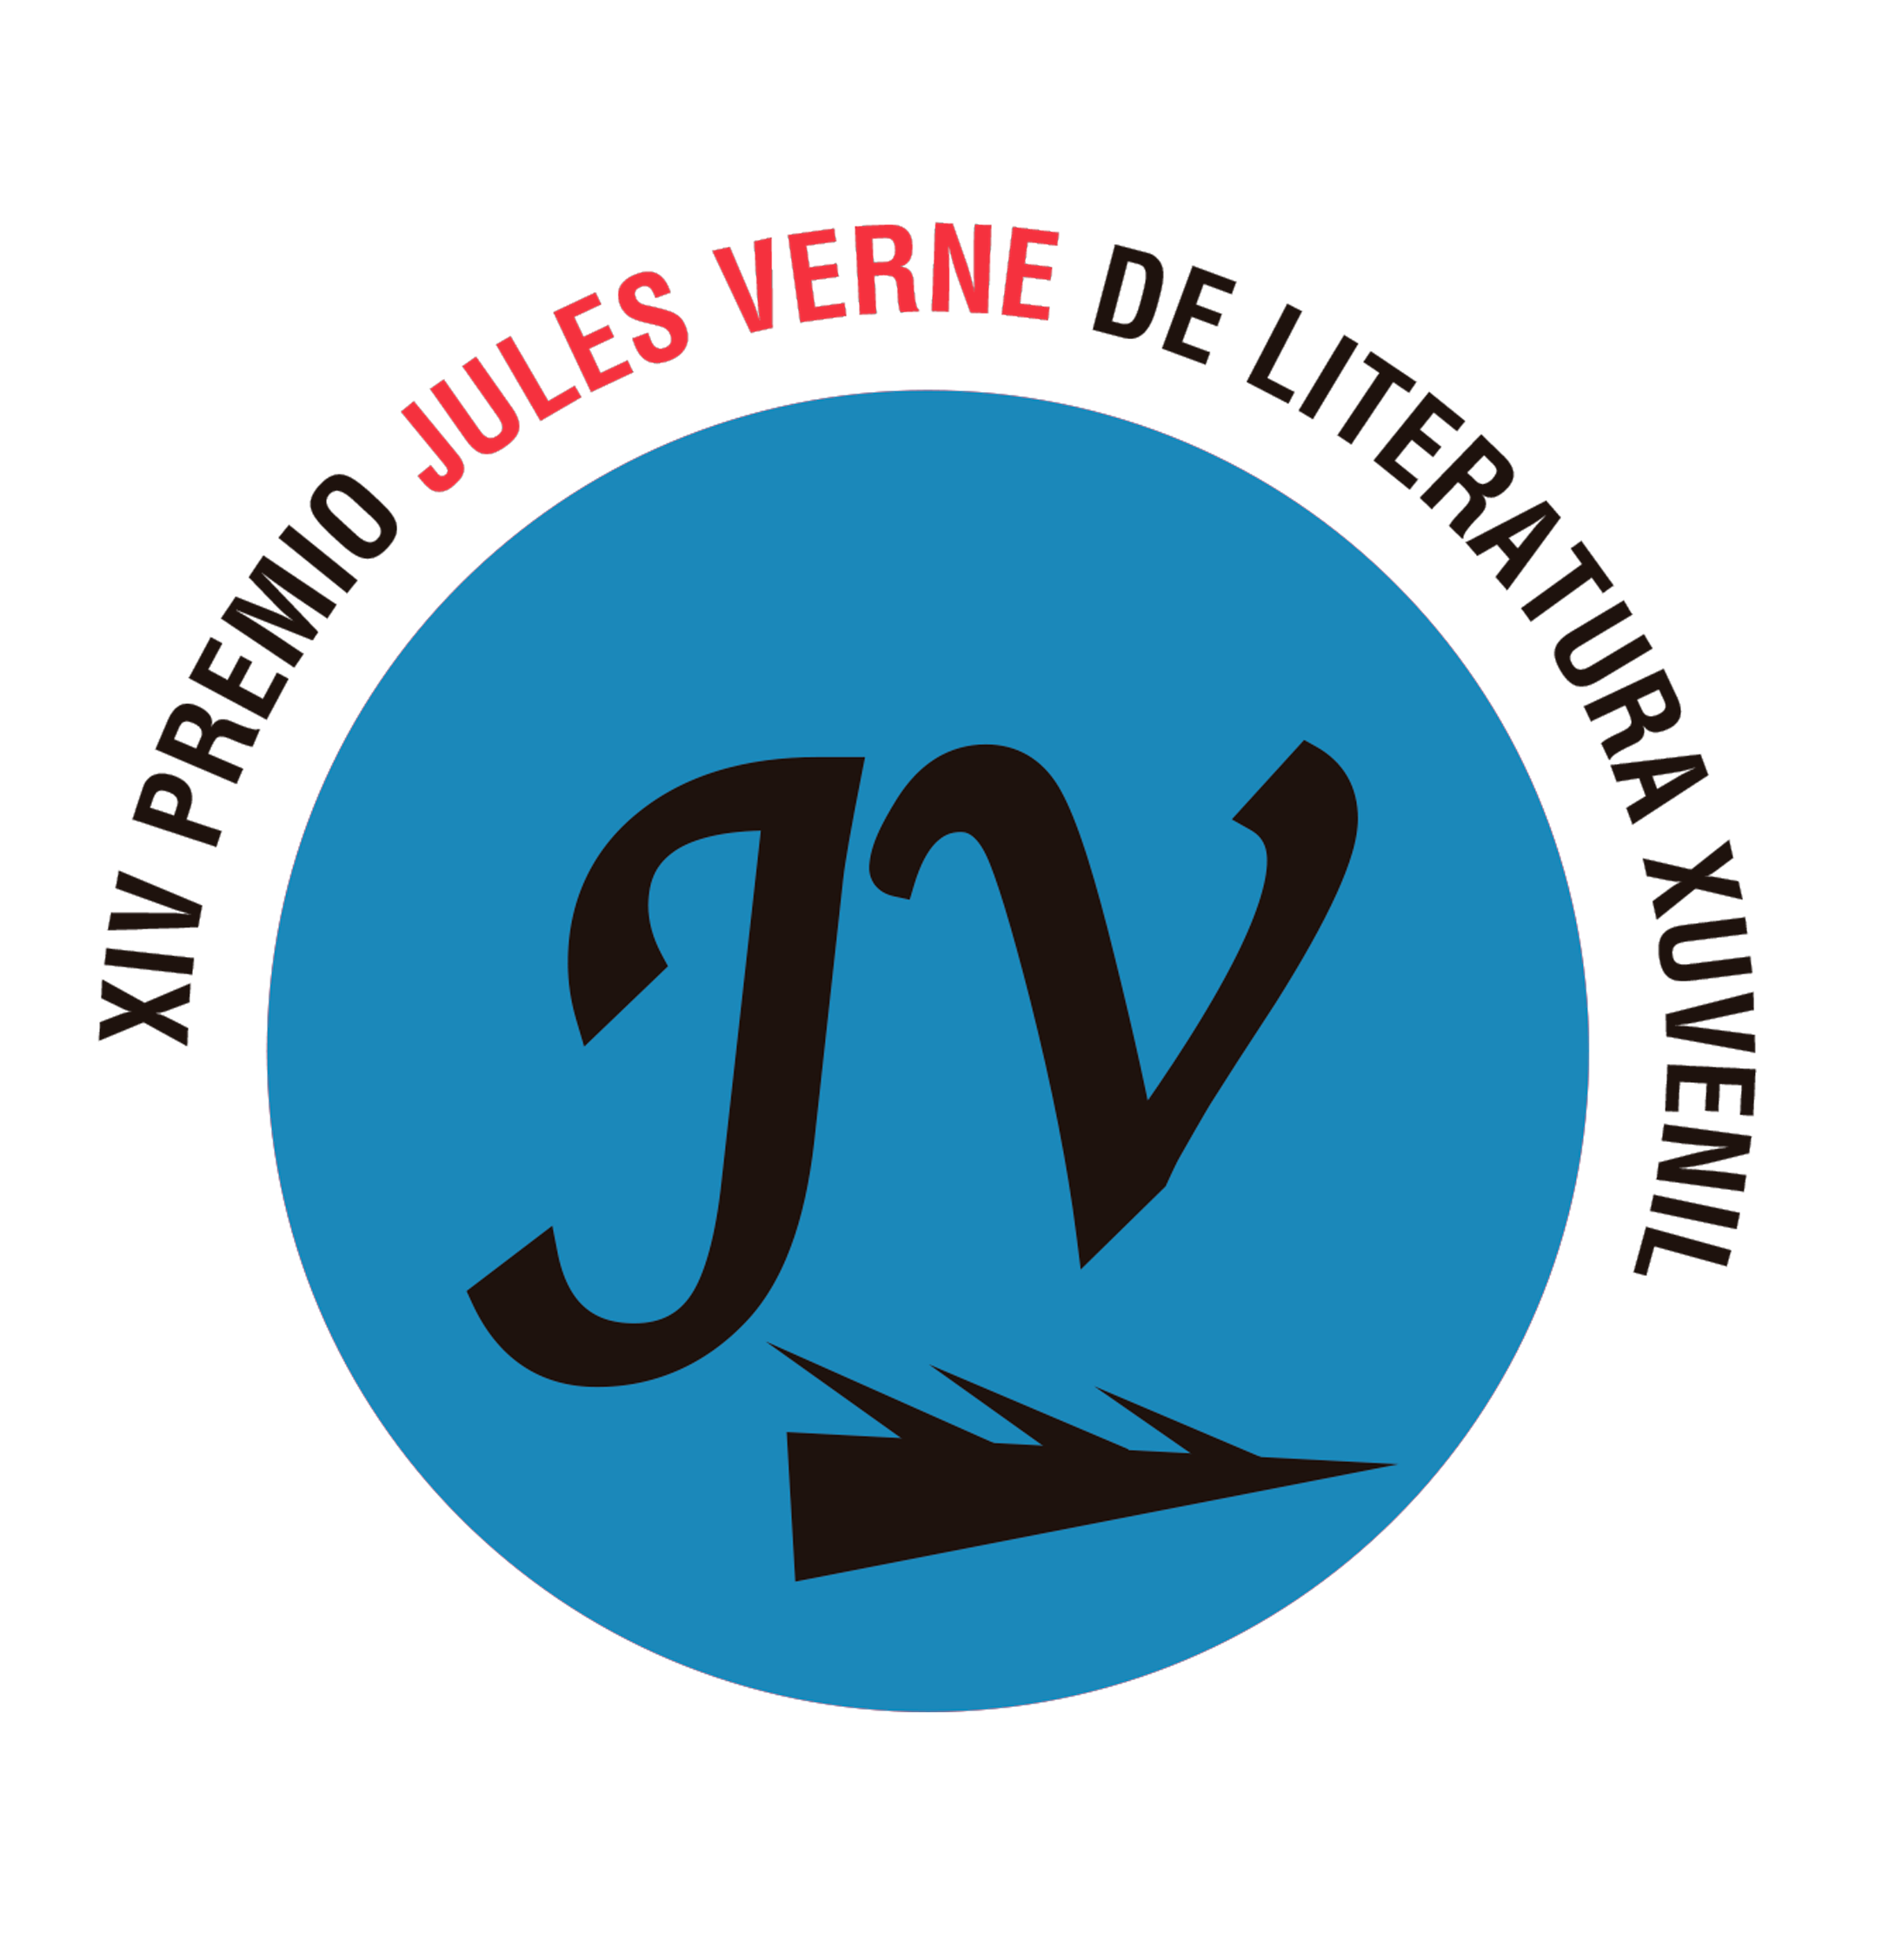 Premio Jules Verne de literatura xuvenil